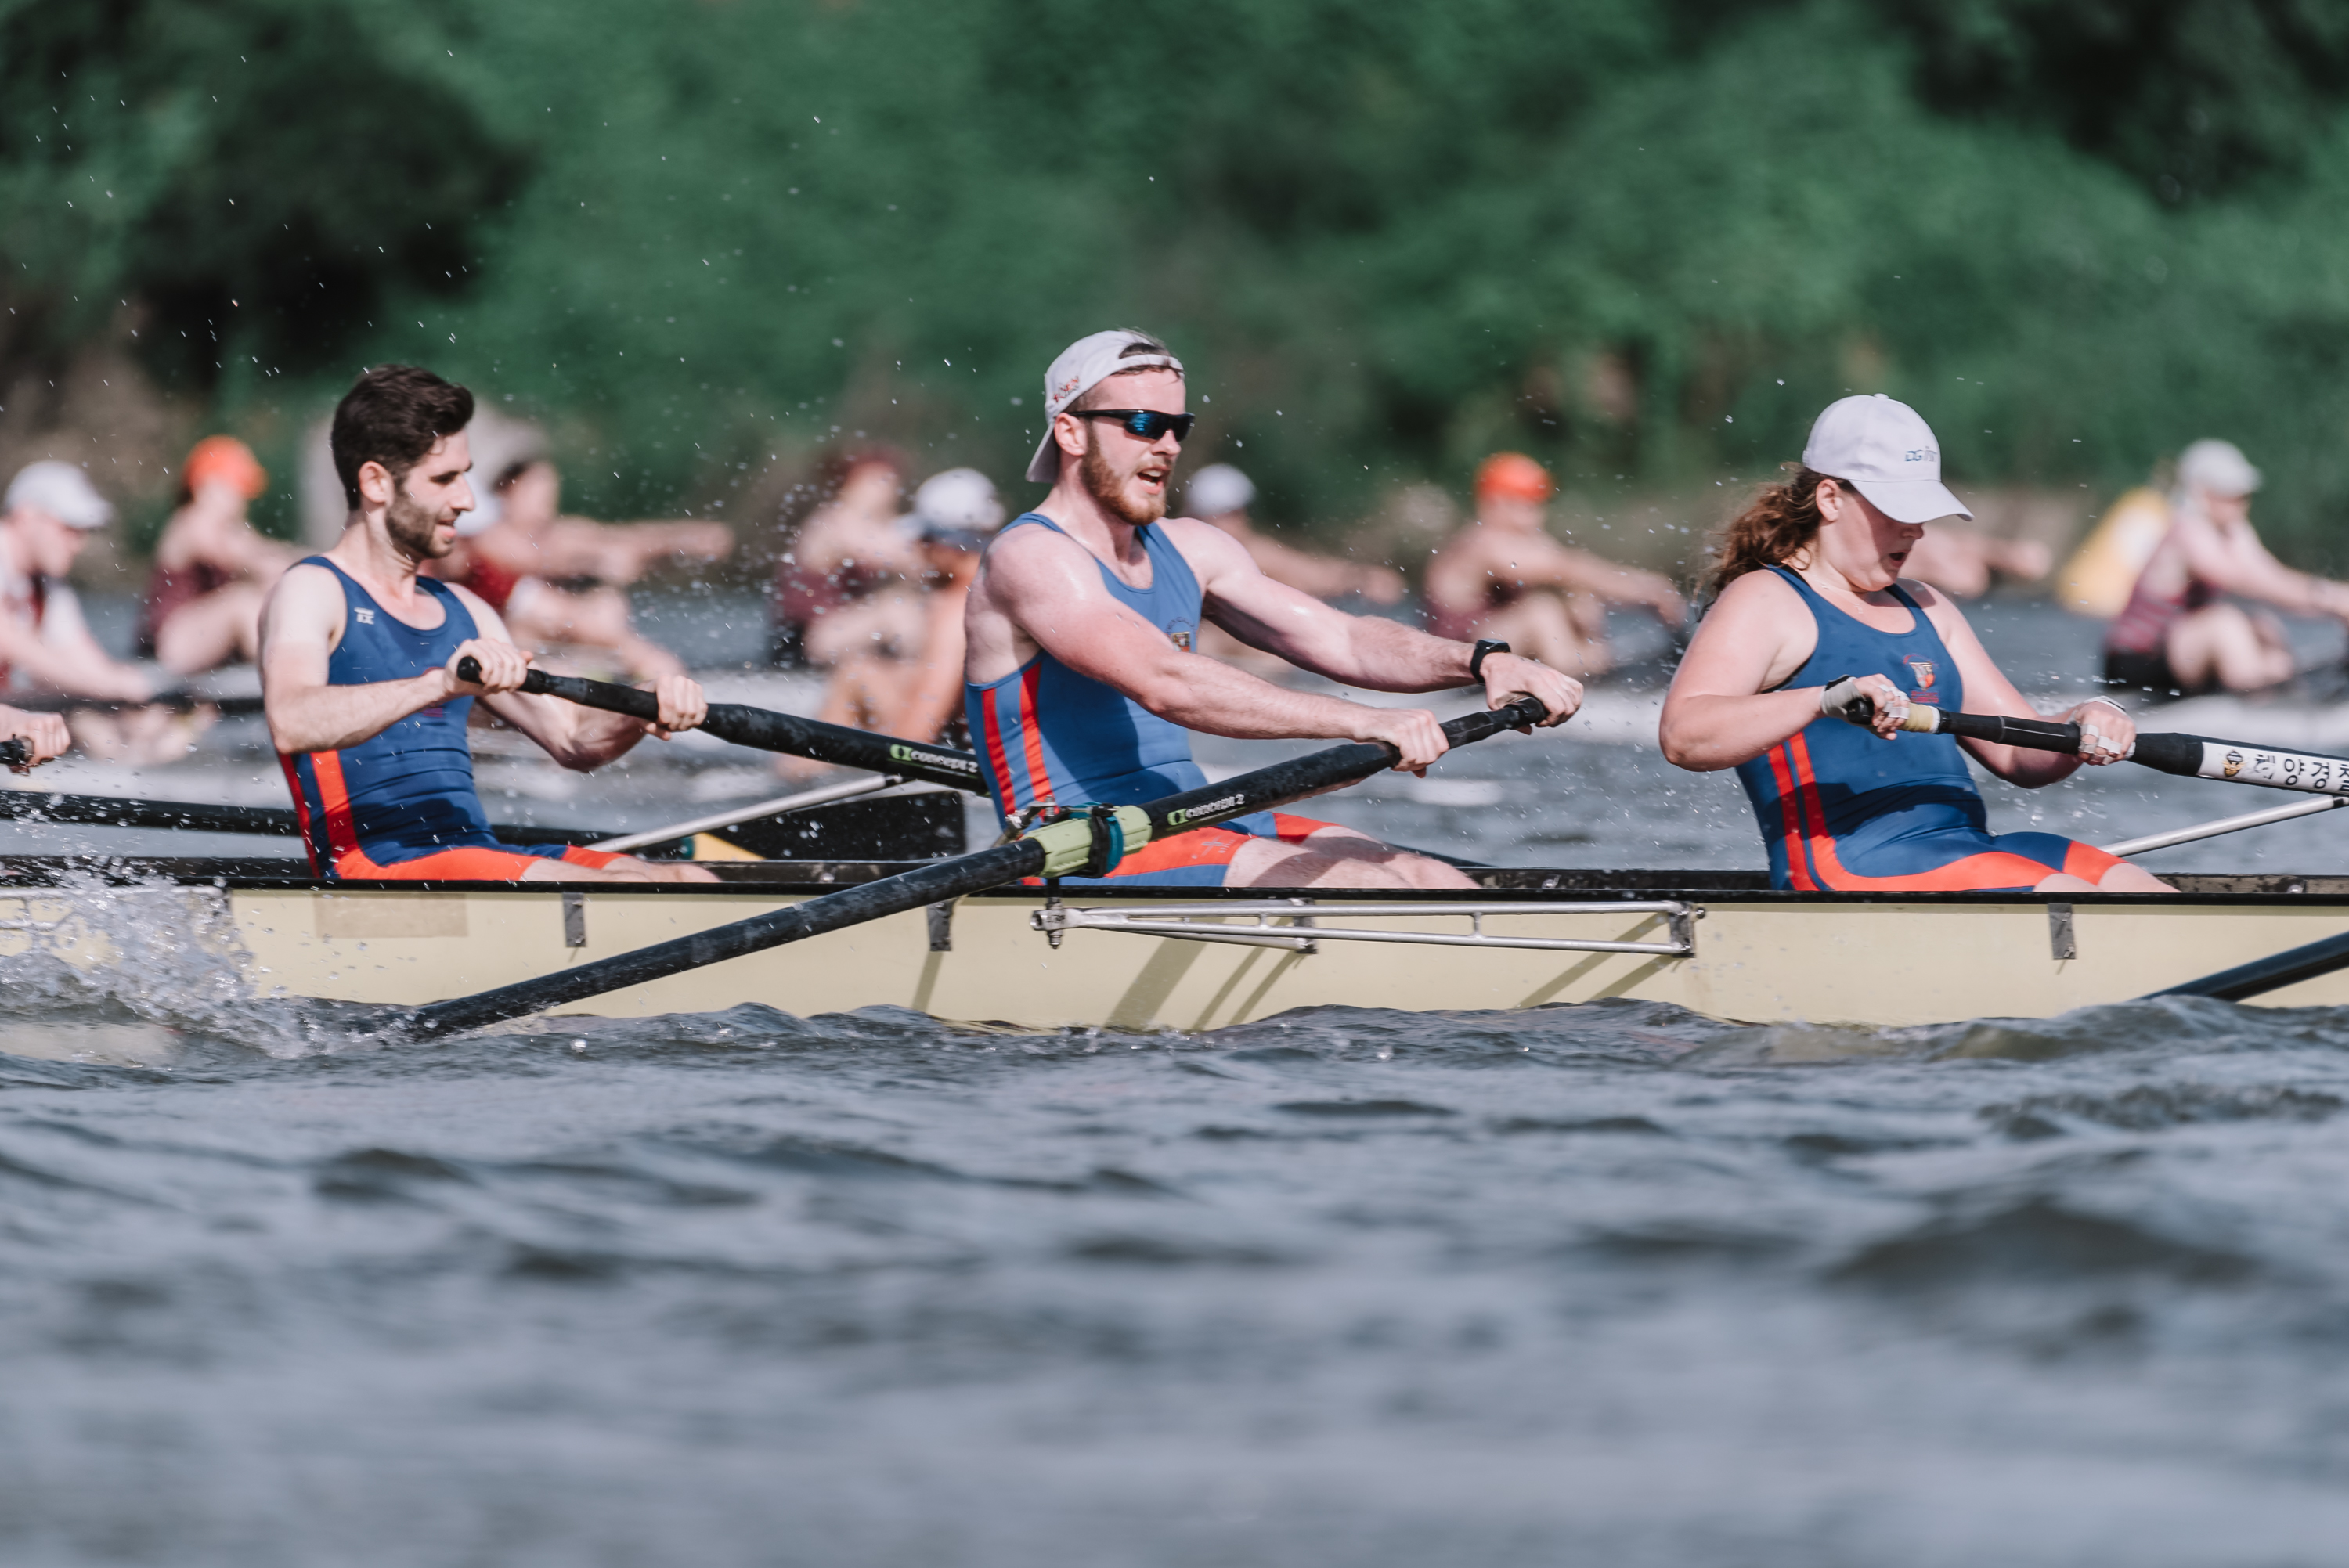 2017 DGIST World-class University Rowing Festival